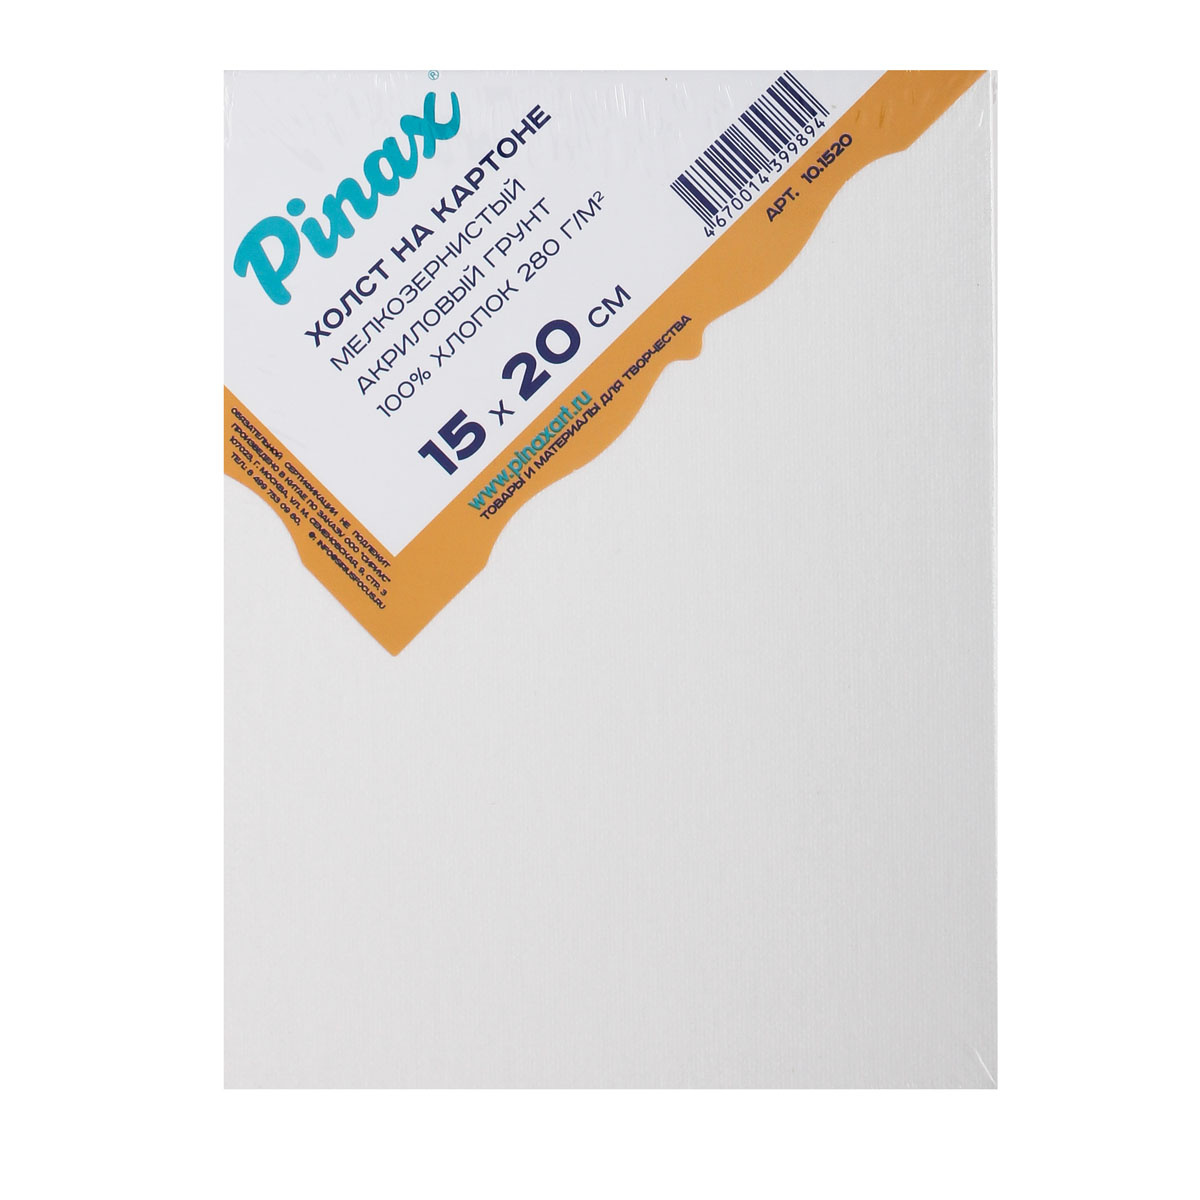 Холст грунтованный на картоне Pinax 280 г 15x20 см холст грунтованный на картоне pinax 280 г 15x20 см